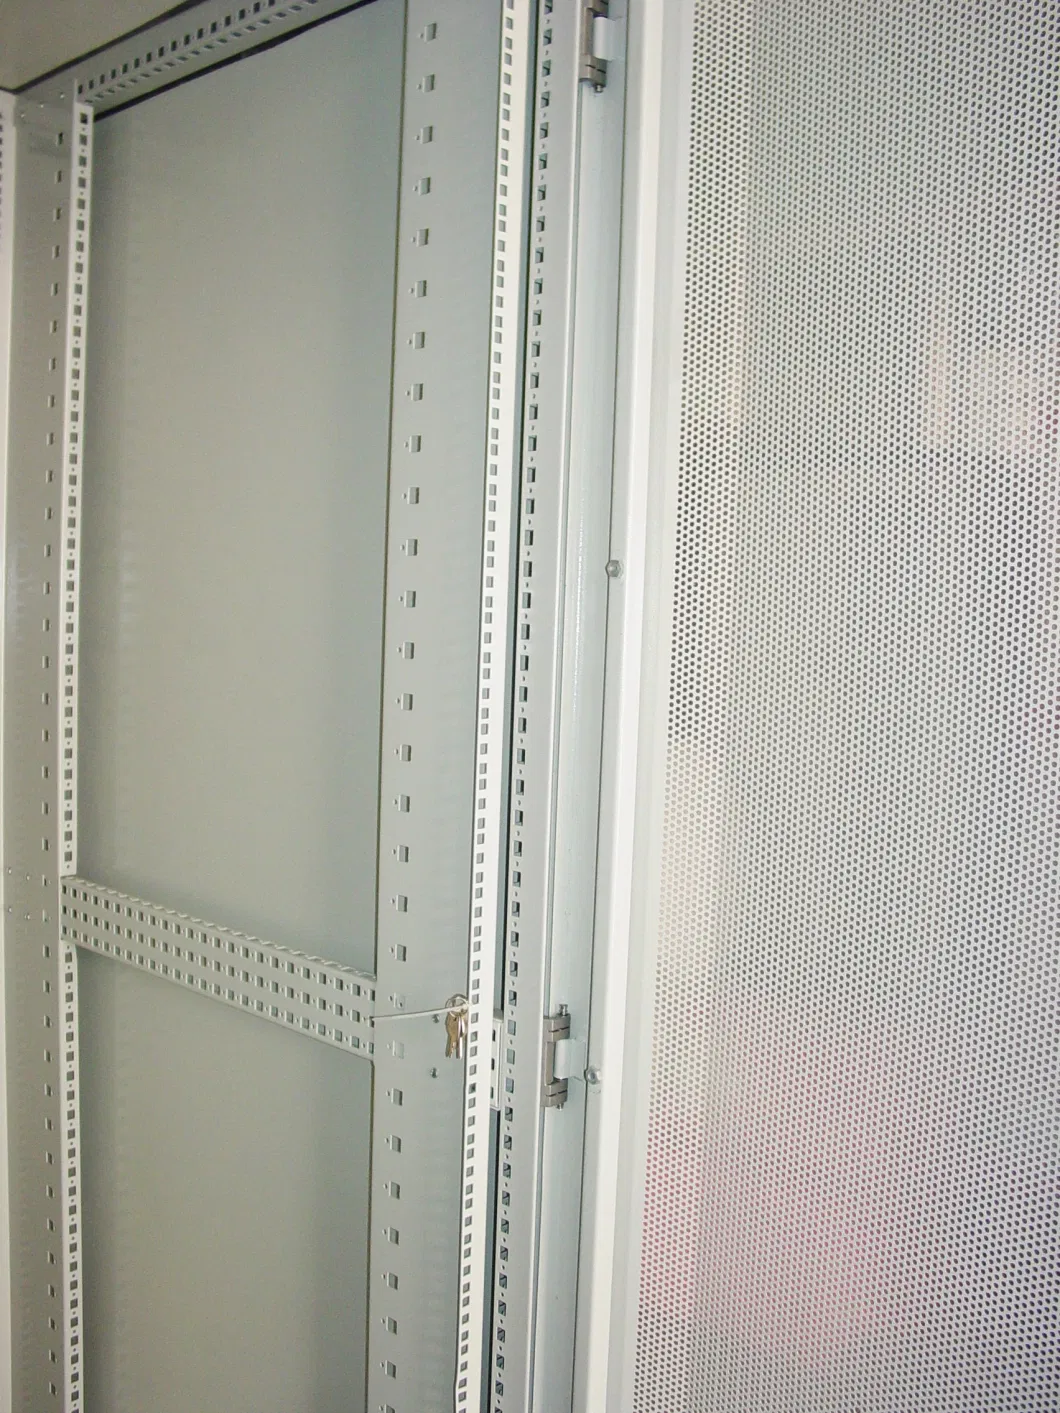 IP65 Metal Electrical Electric Panel Box Cabinet Enclosure Distribution Box